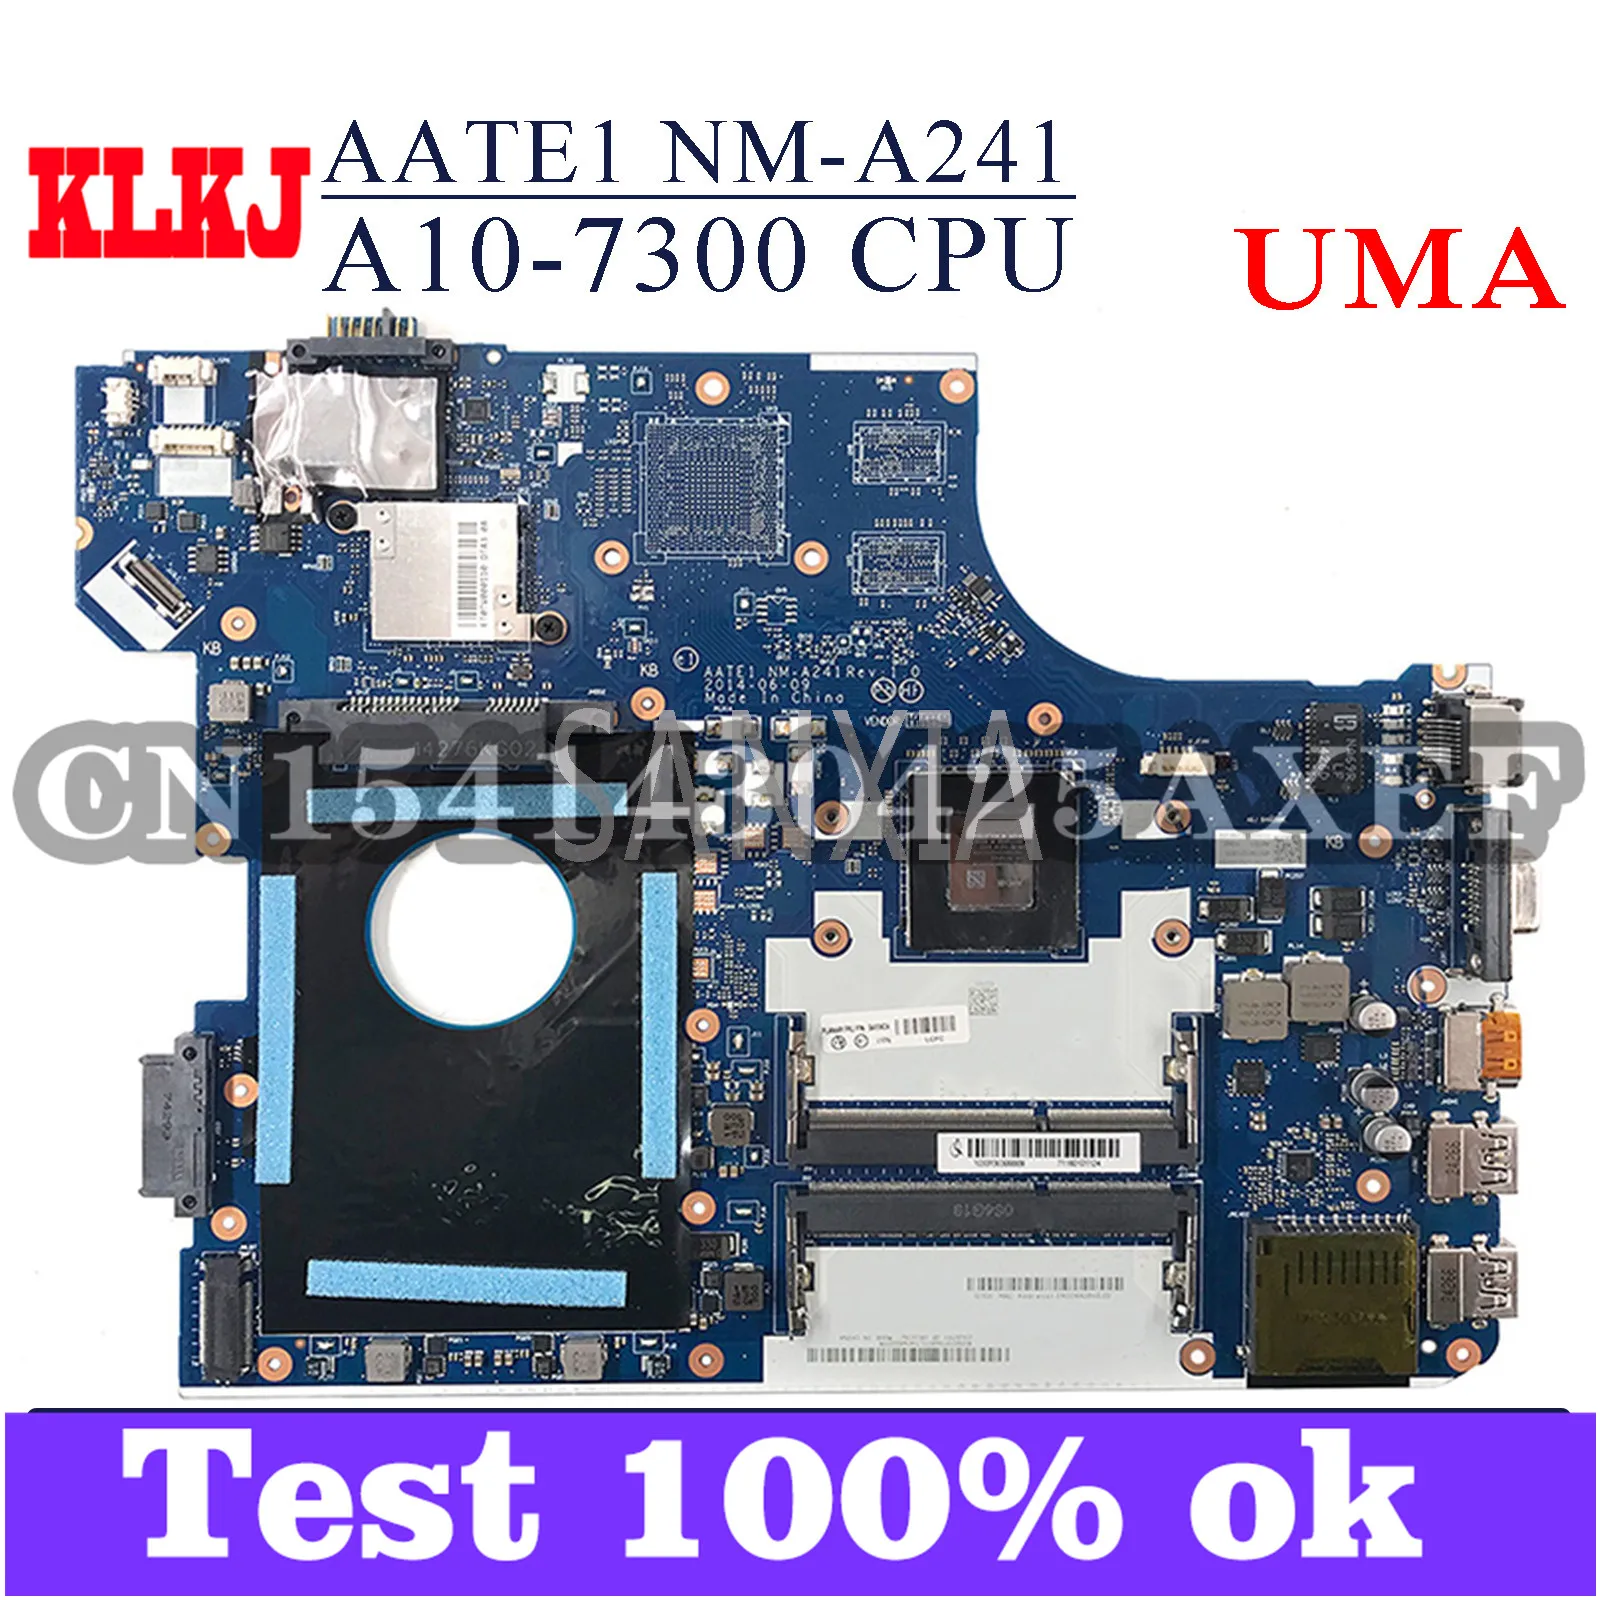 KLKJ AATE1 NM-A241     Lenovo ThinkPad E555    A10-7300 UMA